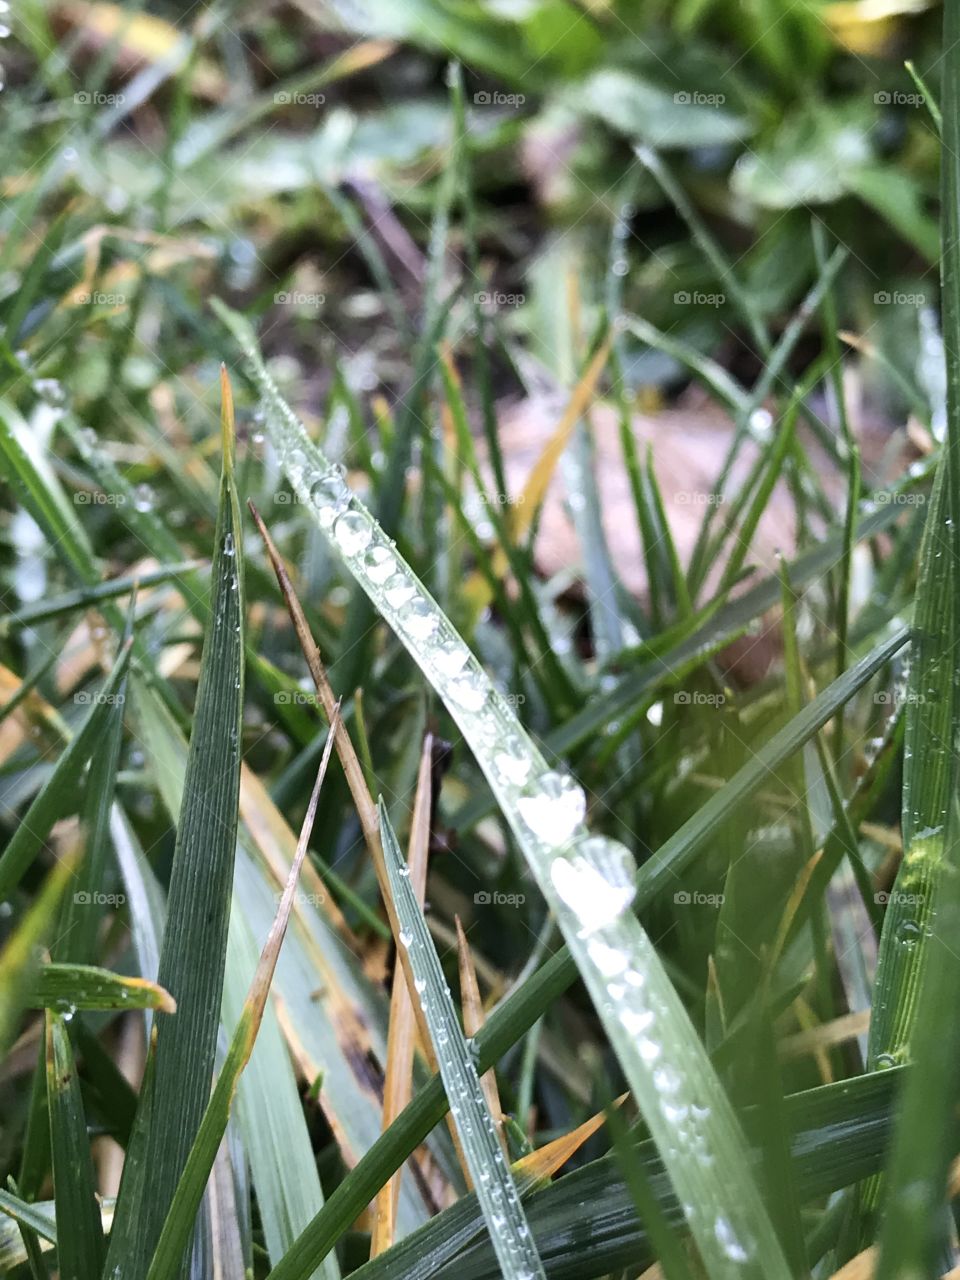 Pretty little dew drops all in a row...